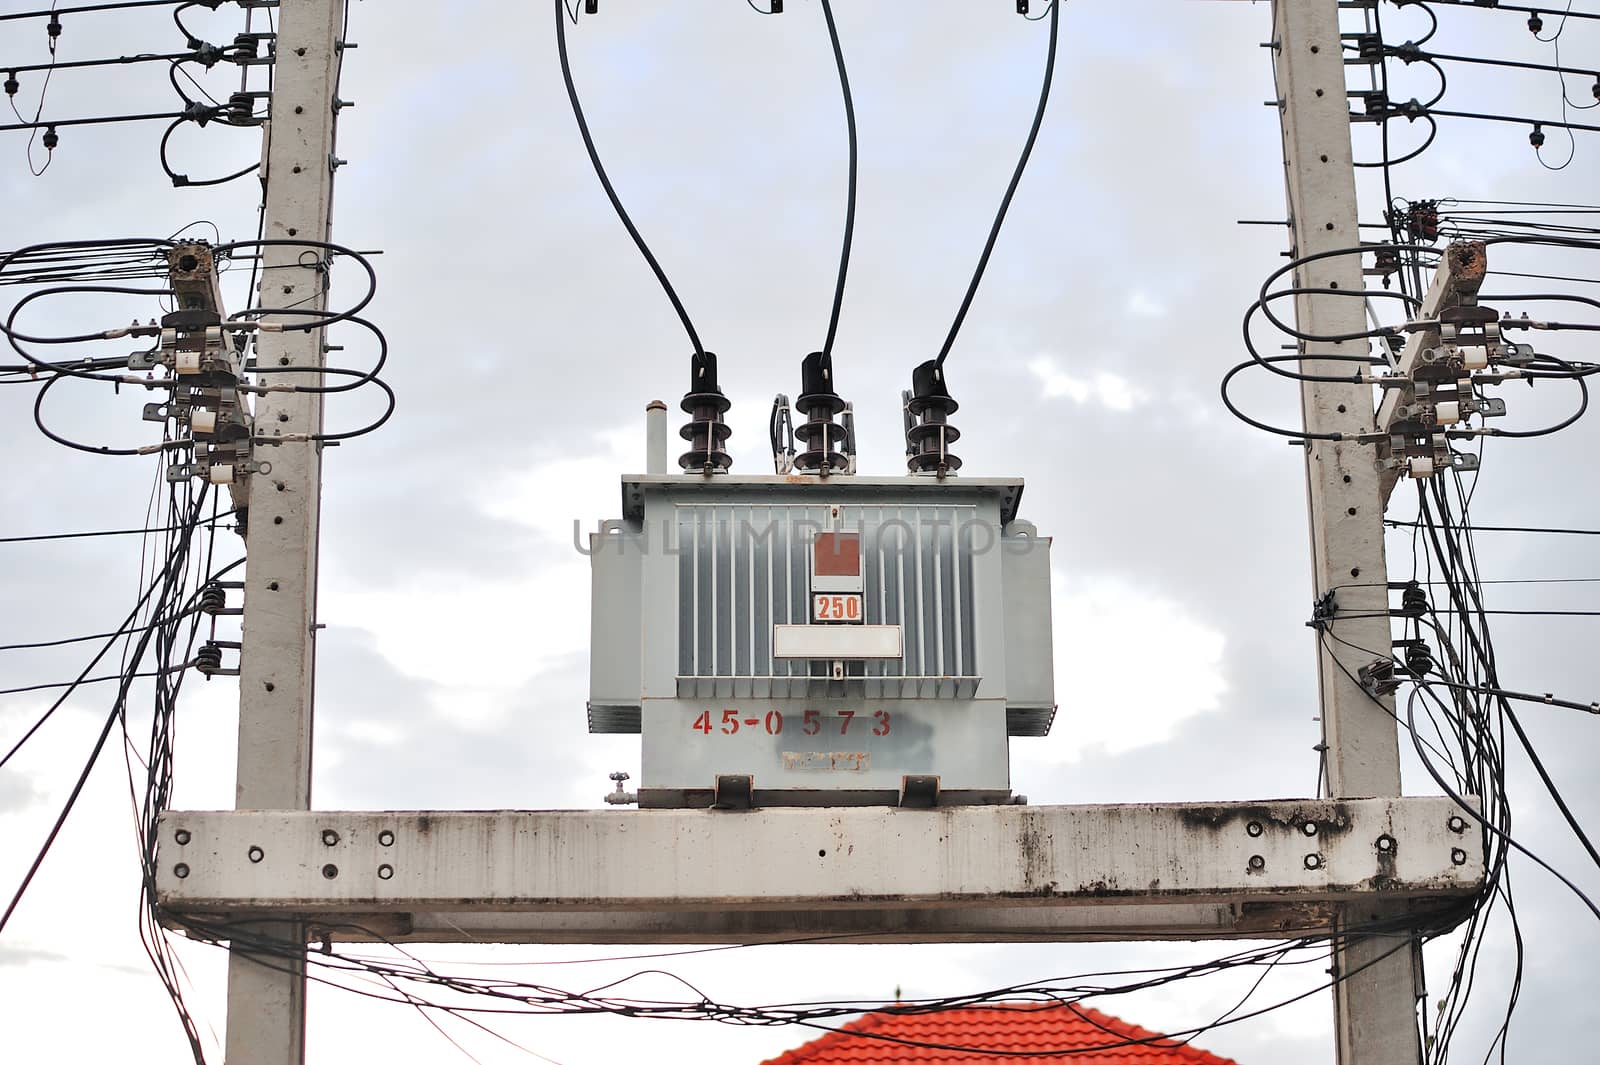 transformer on high power station. High voltage